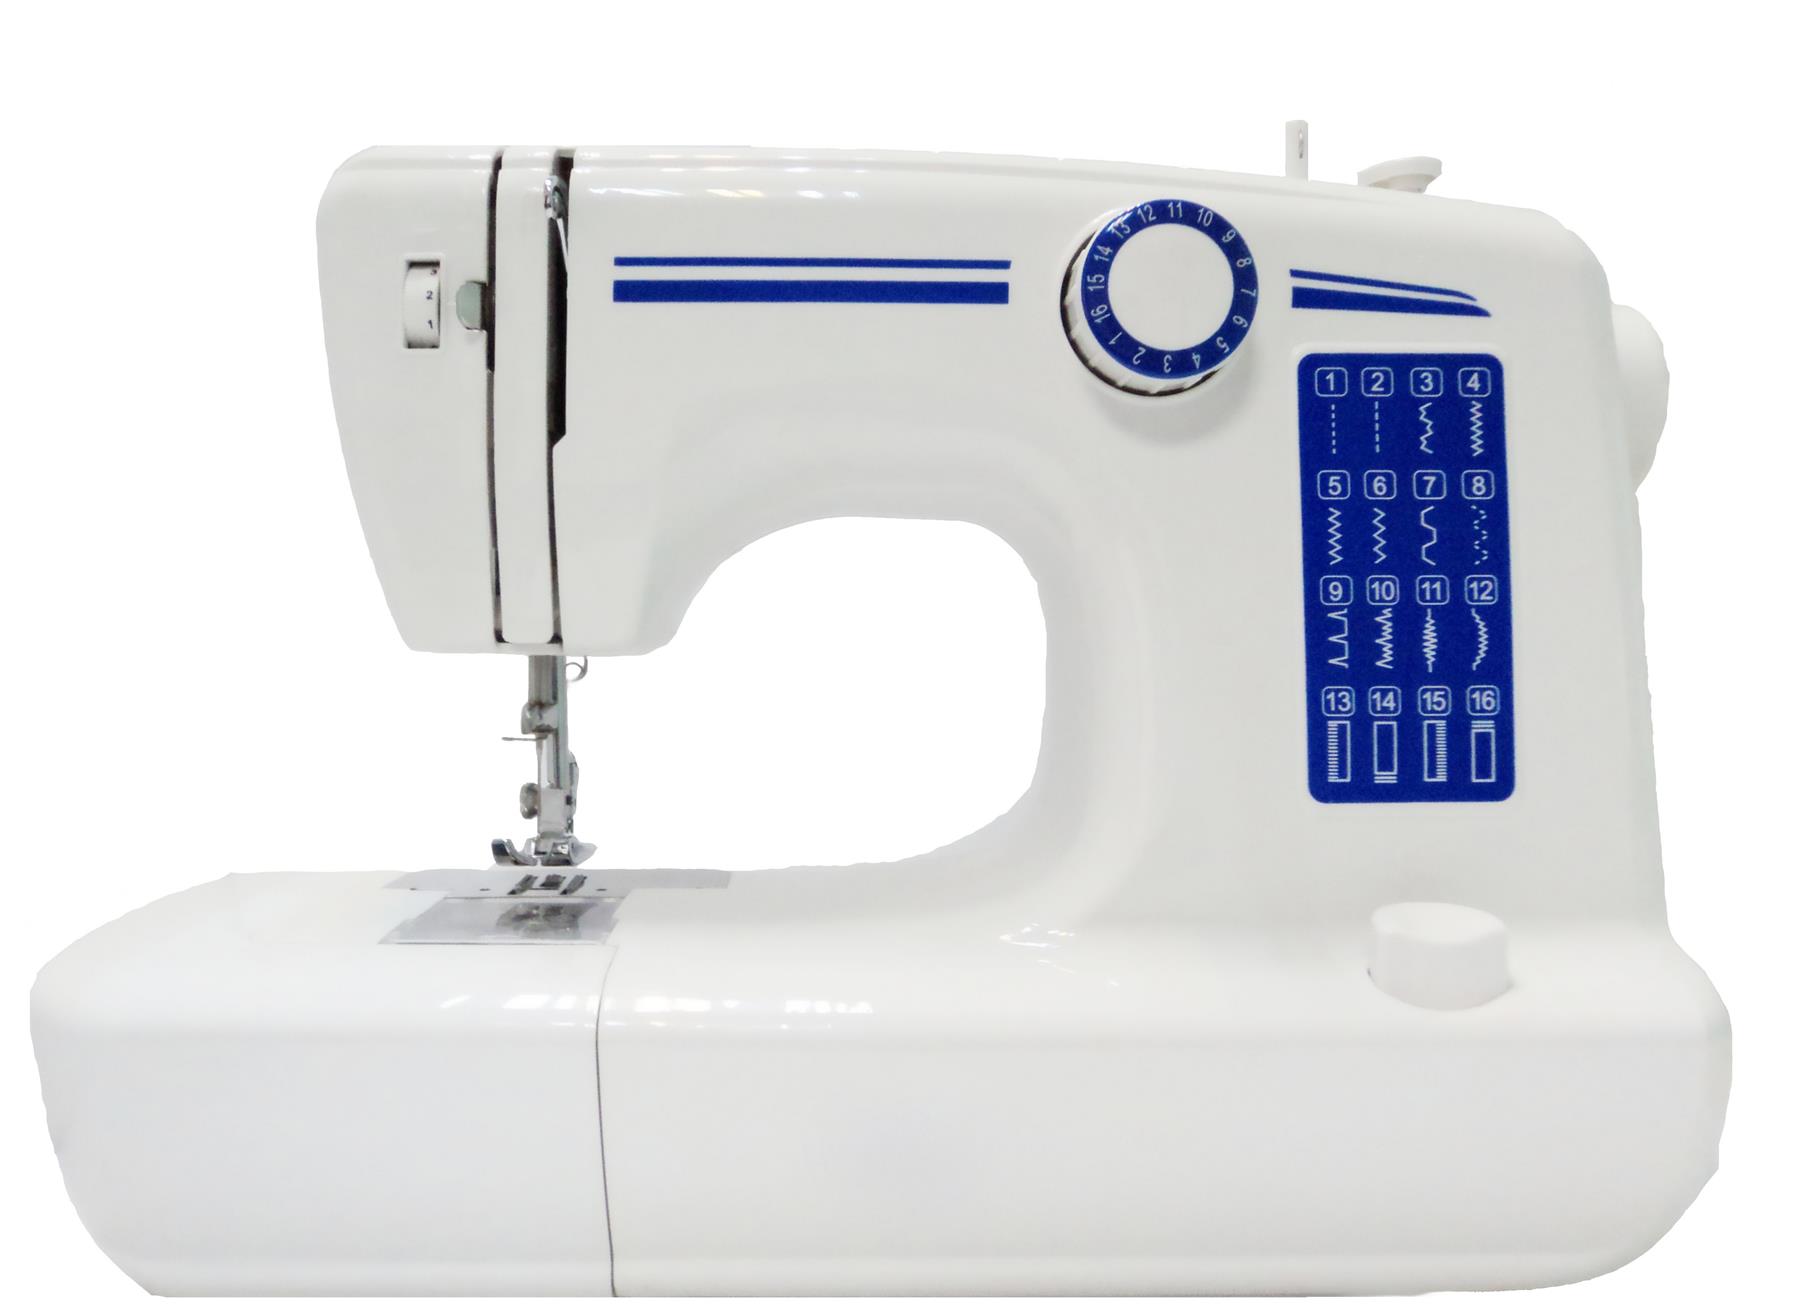 Medium-sized multifunctional domestic sewing machine